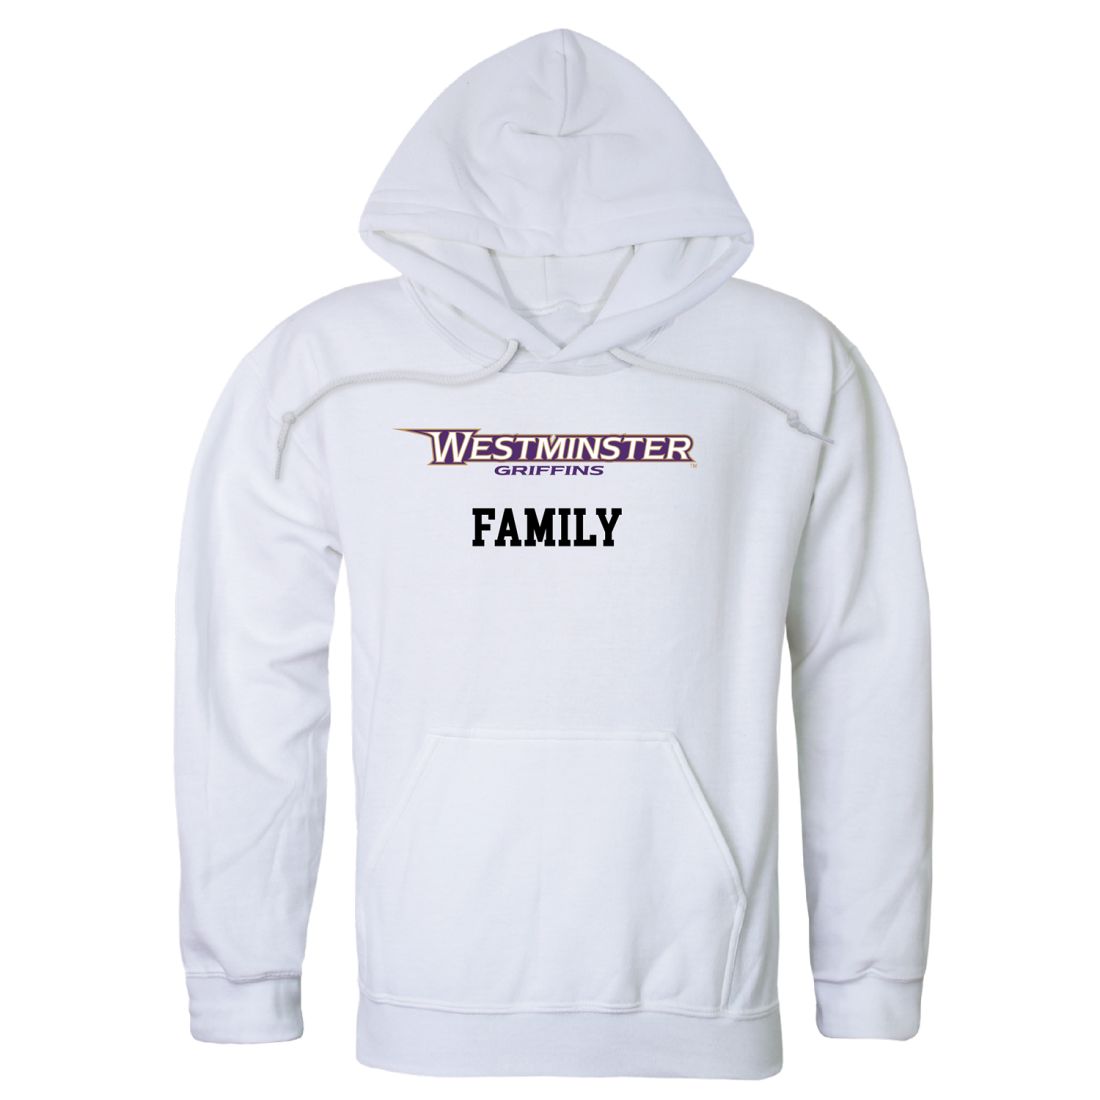 Westminster College Griffins Family Hoodie Sweatshirts